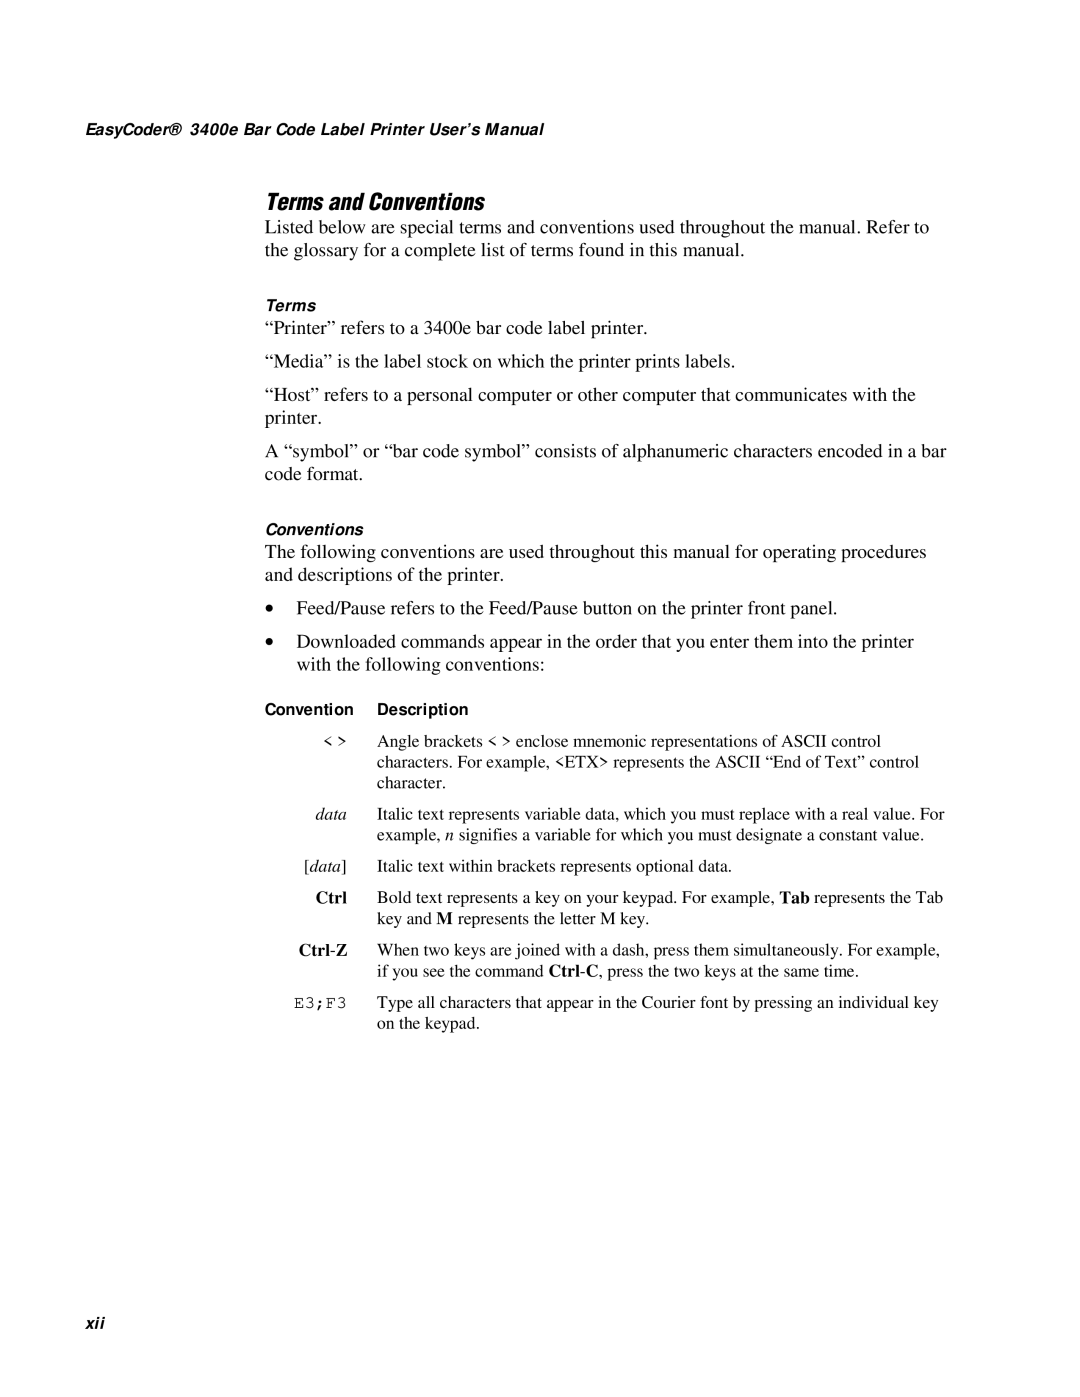 IBM user manual Terms and Conventions, EasyCoder 3400e Bar Code Label Printer User’s Manual, Convention Description 